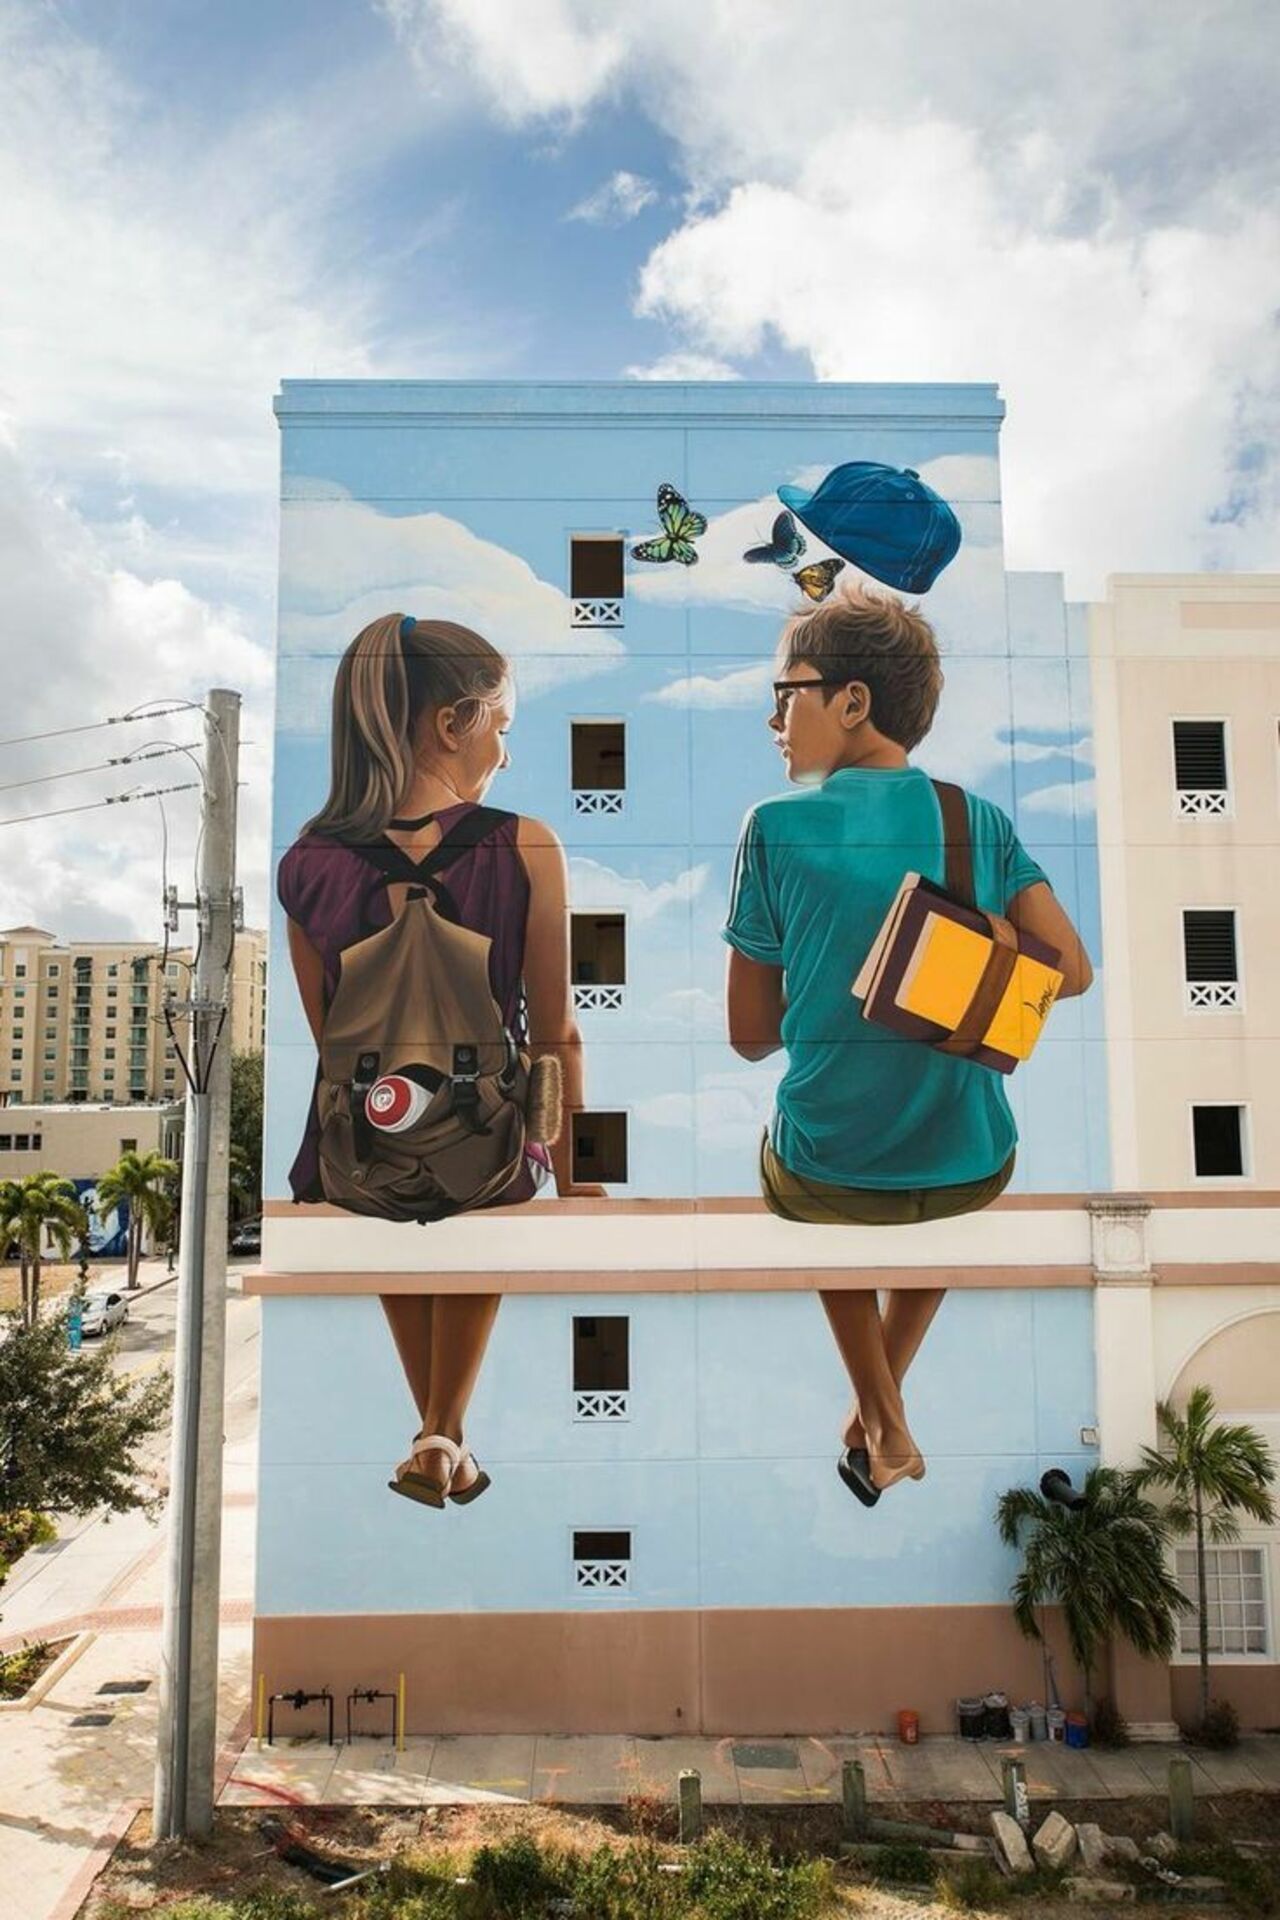 Lonac at West Palm Beach, Florida #mural #graffiti #streetart #art https://t.co/g7v6iL2YIu